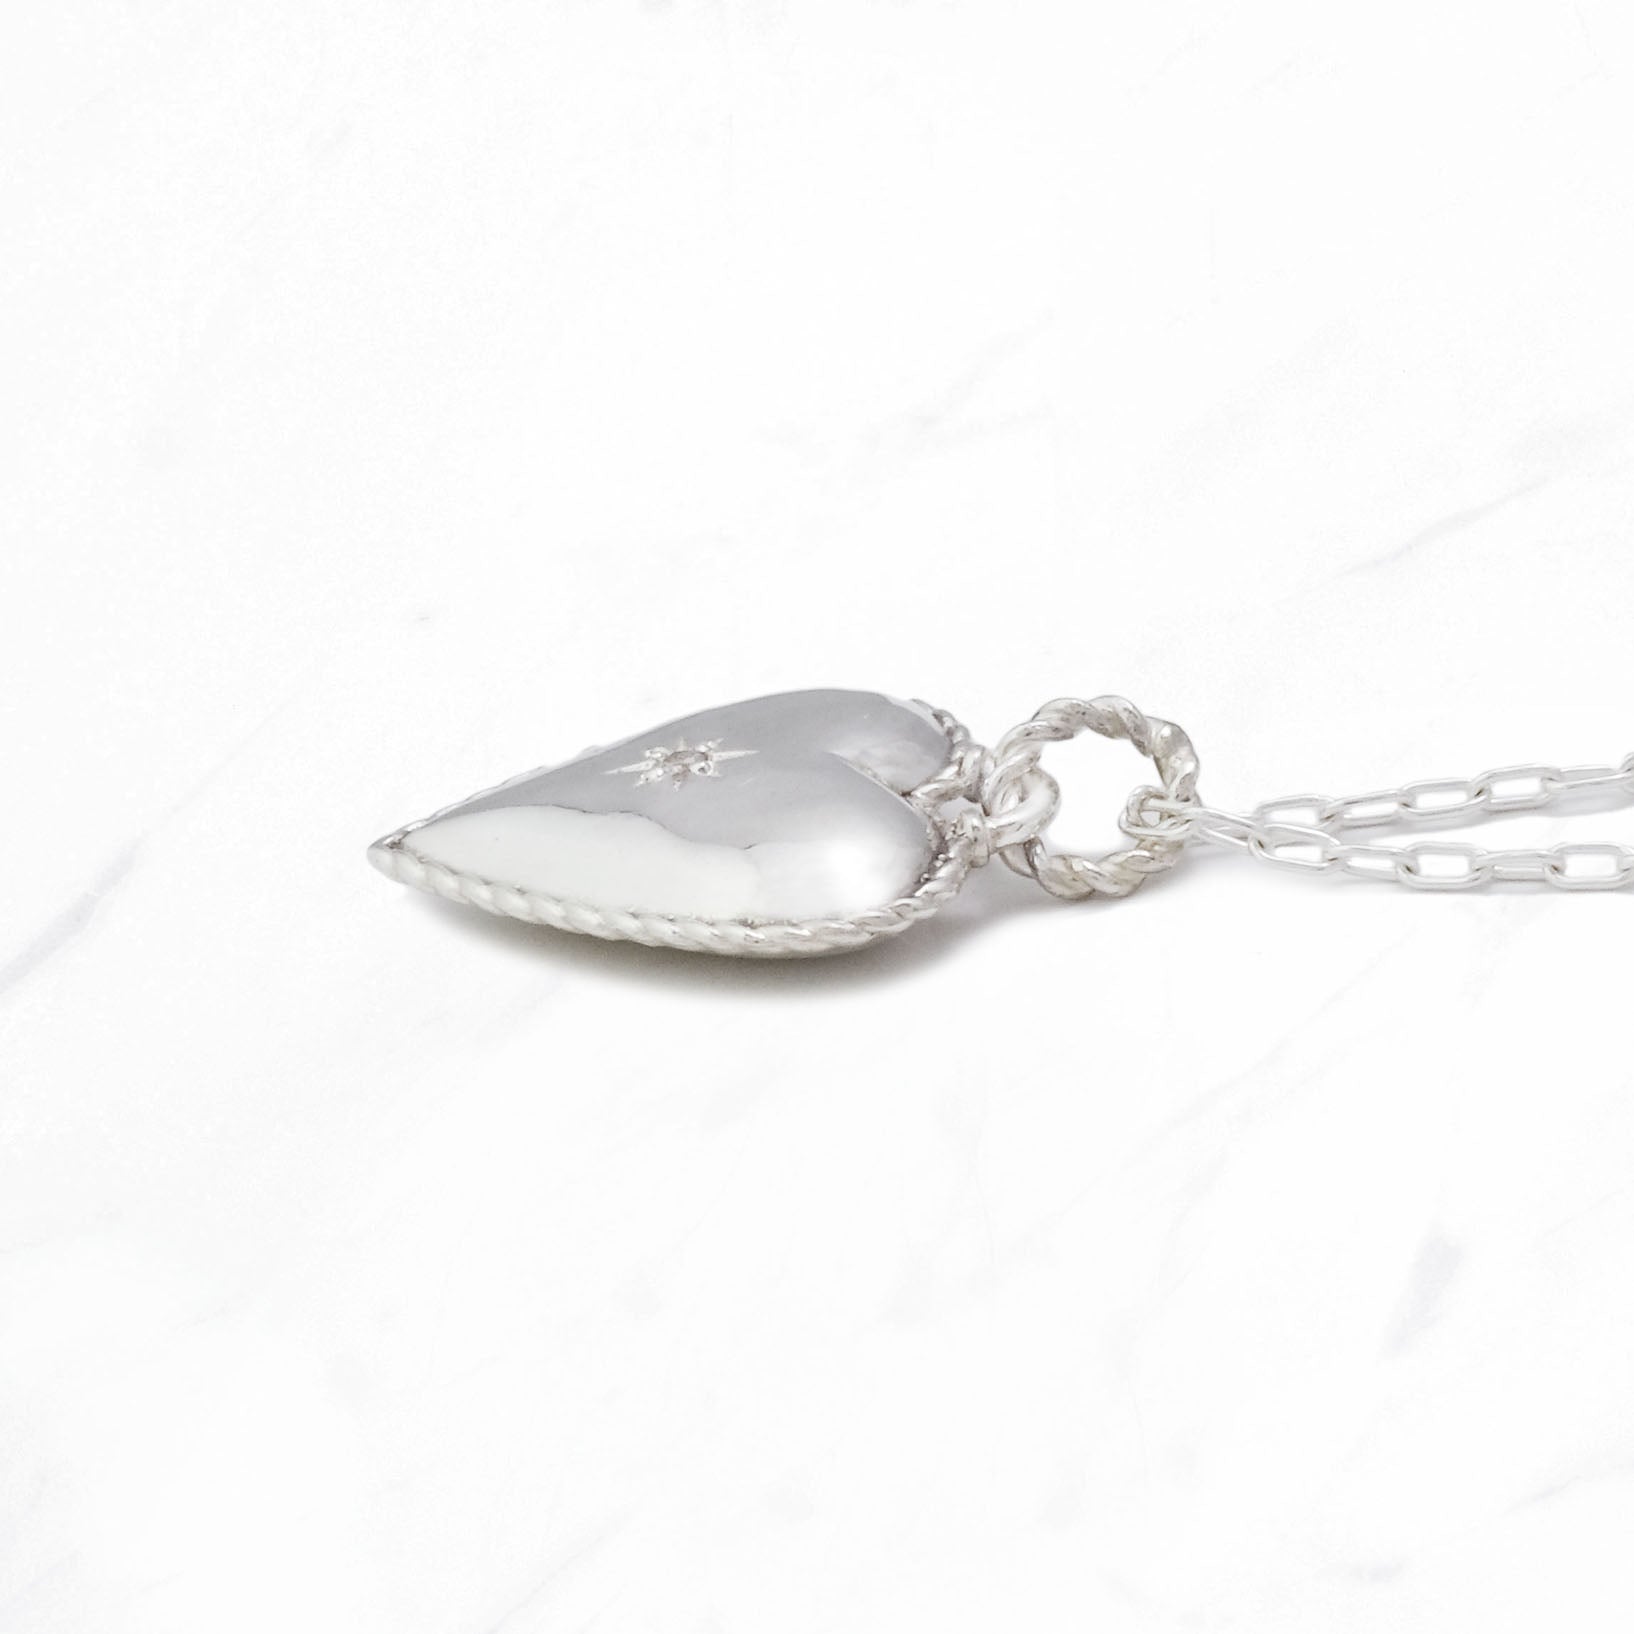 Silver Antique Heart Necklace